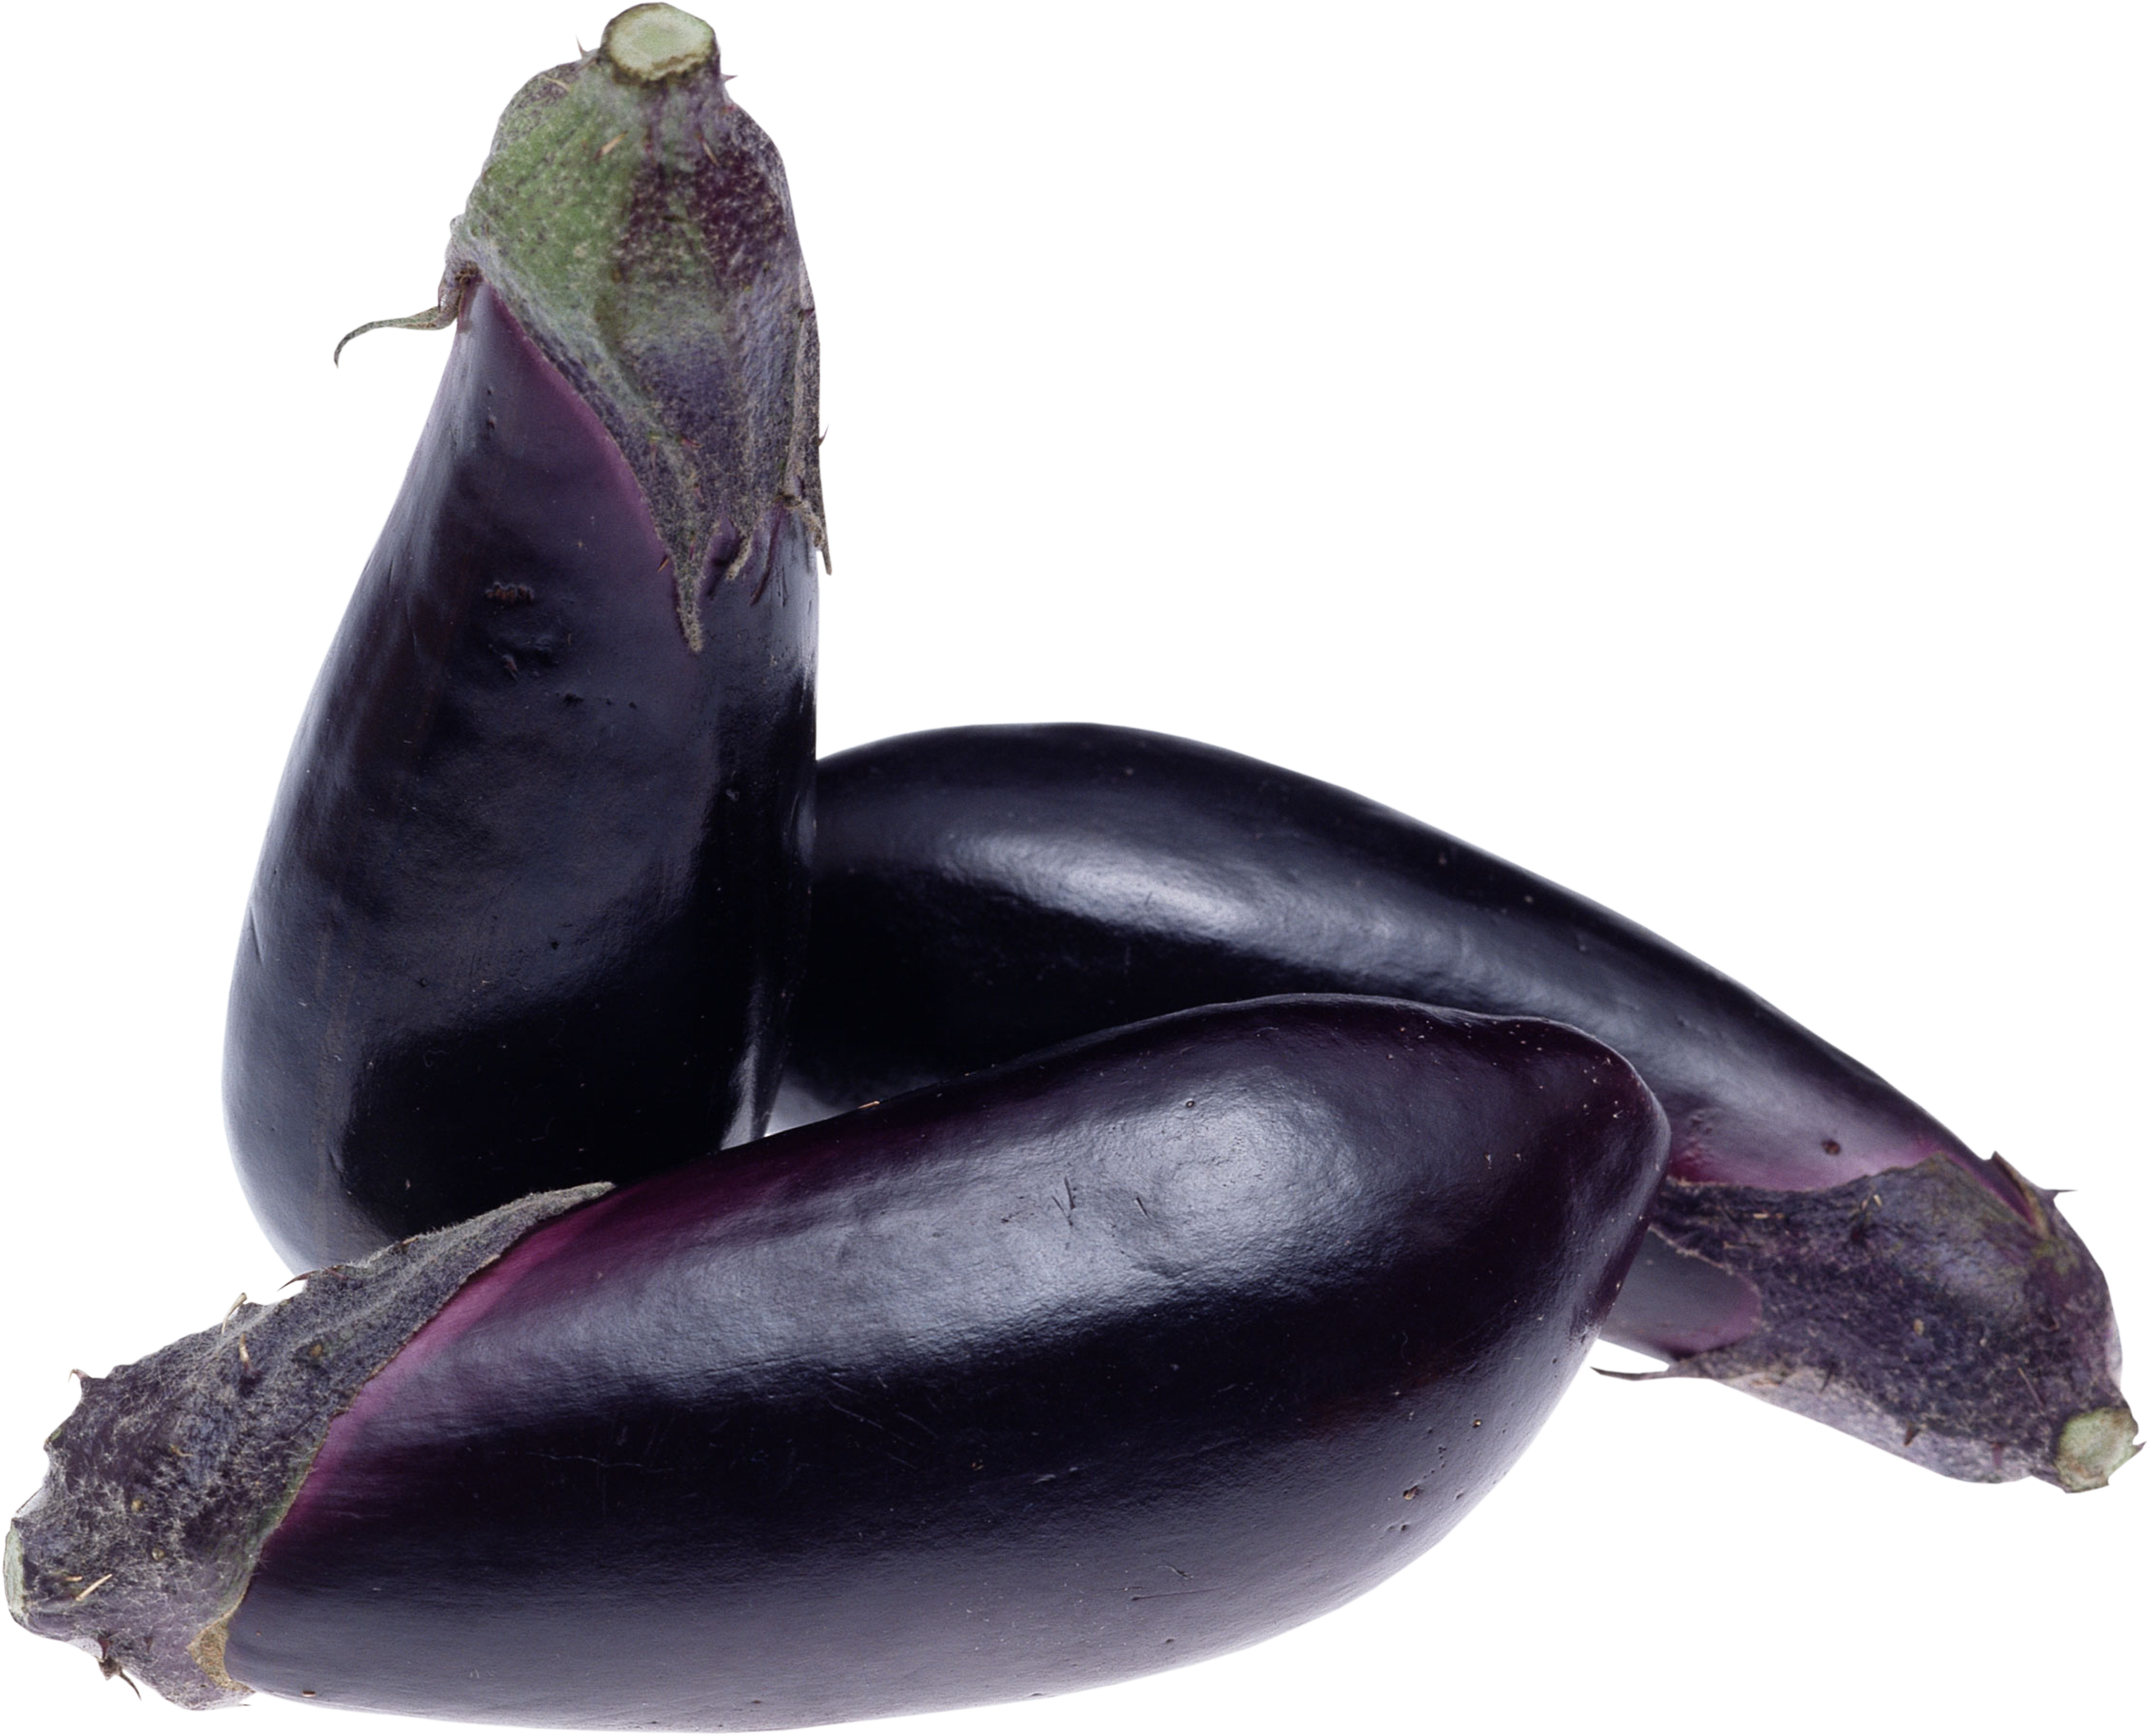 plant clipart eggplant